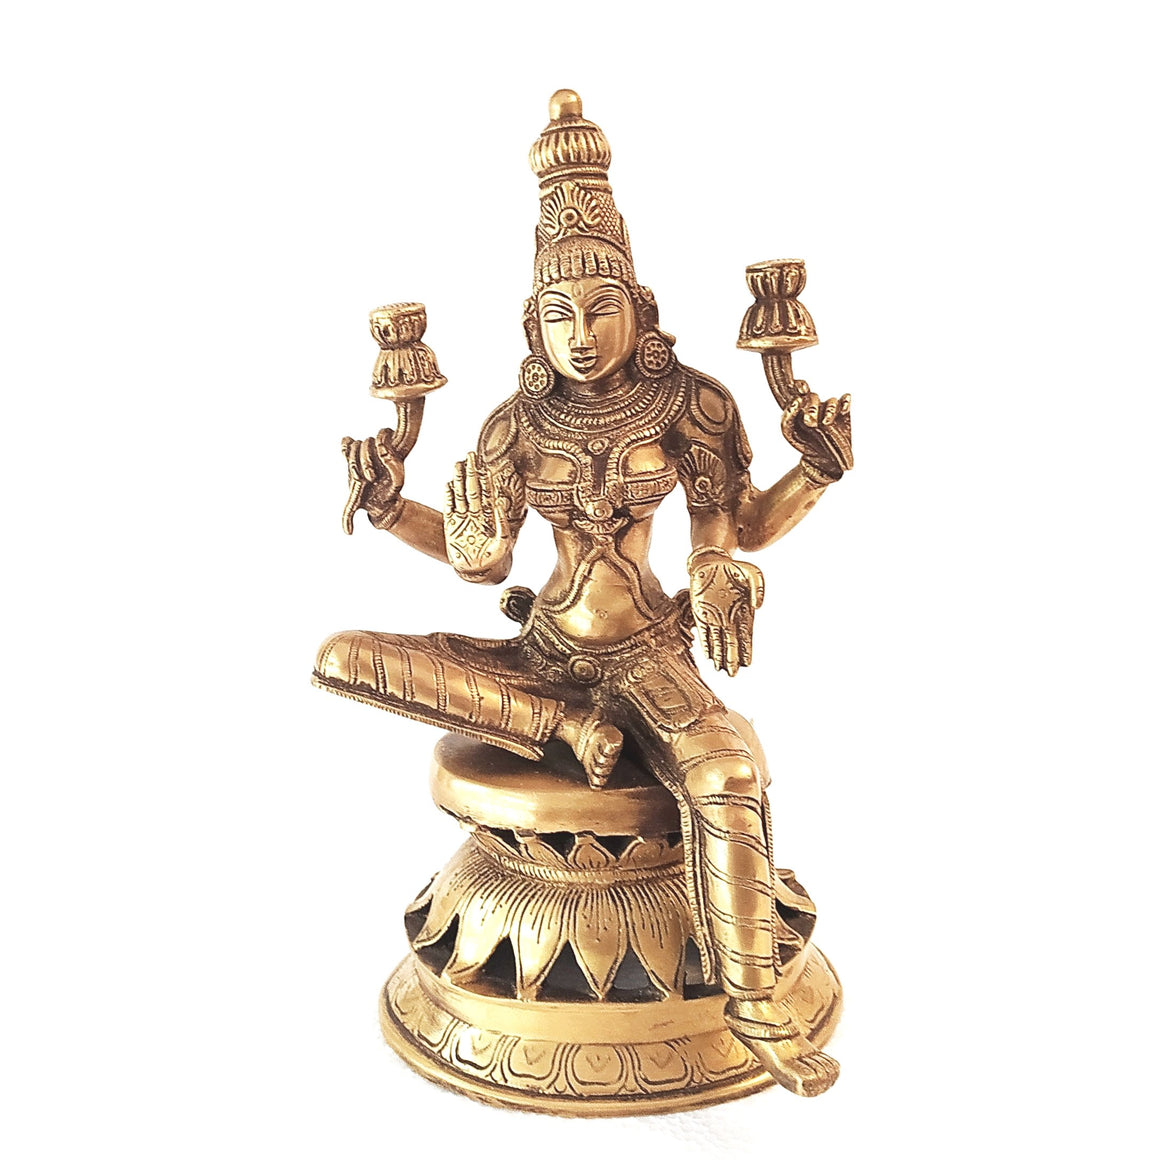 Lakshmi - Goddess Of Wealth & Prosperity Sitting On Lotus Flower.  Ht 31 cm x Width 18 cm